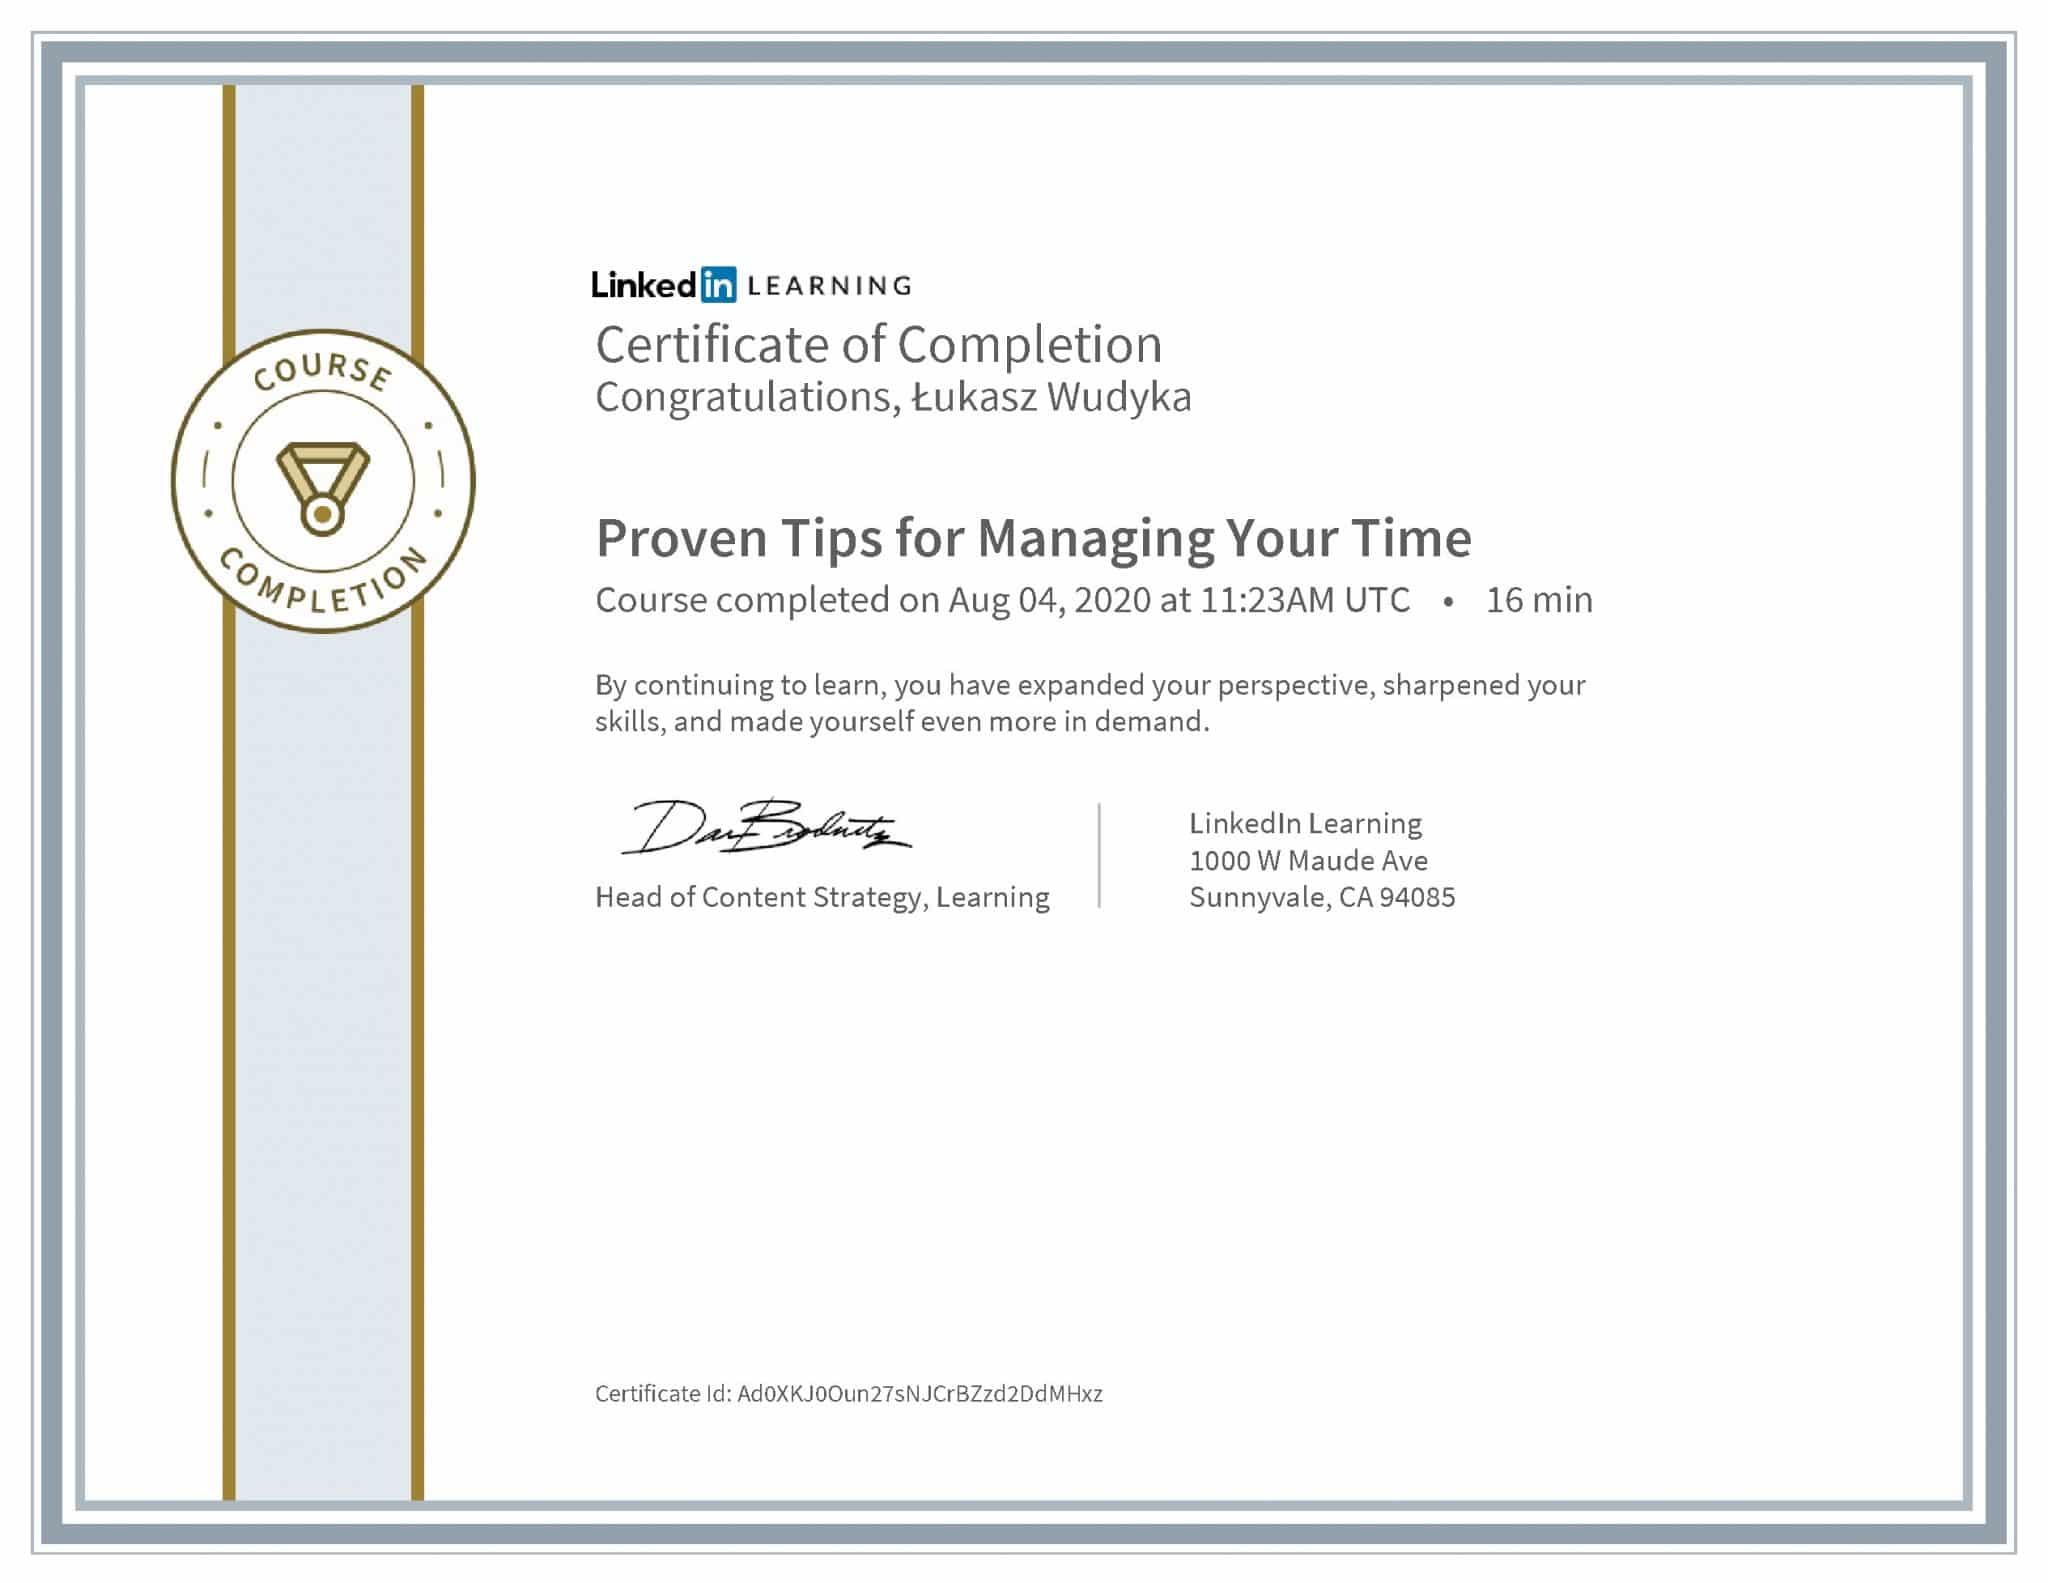 Łukasz Wudyka certyfikat LinkedIn Proven Tips for Managing Your Time